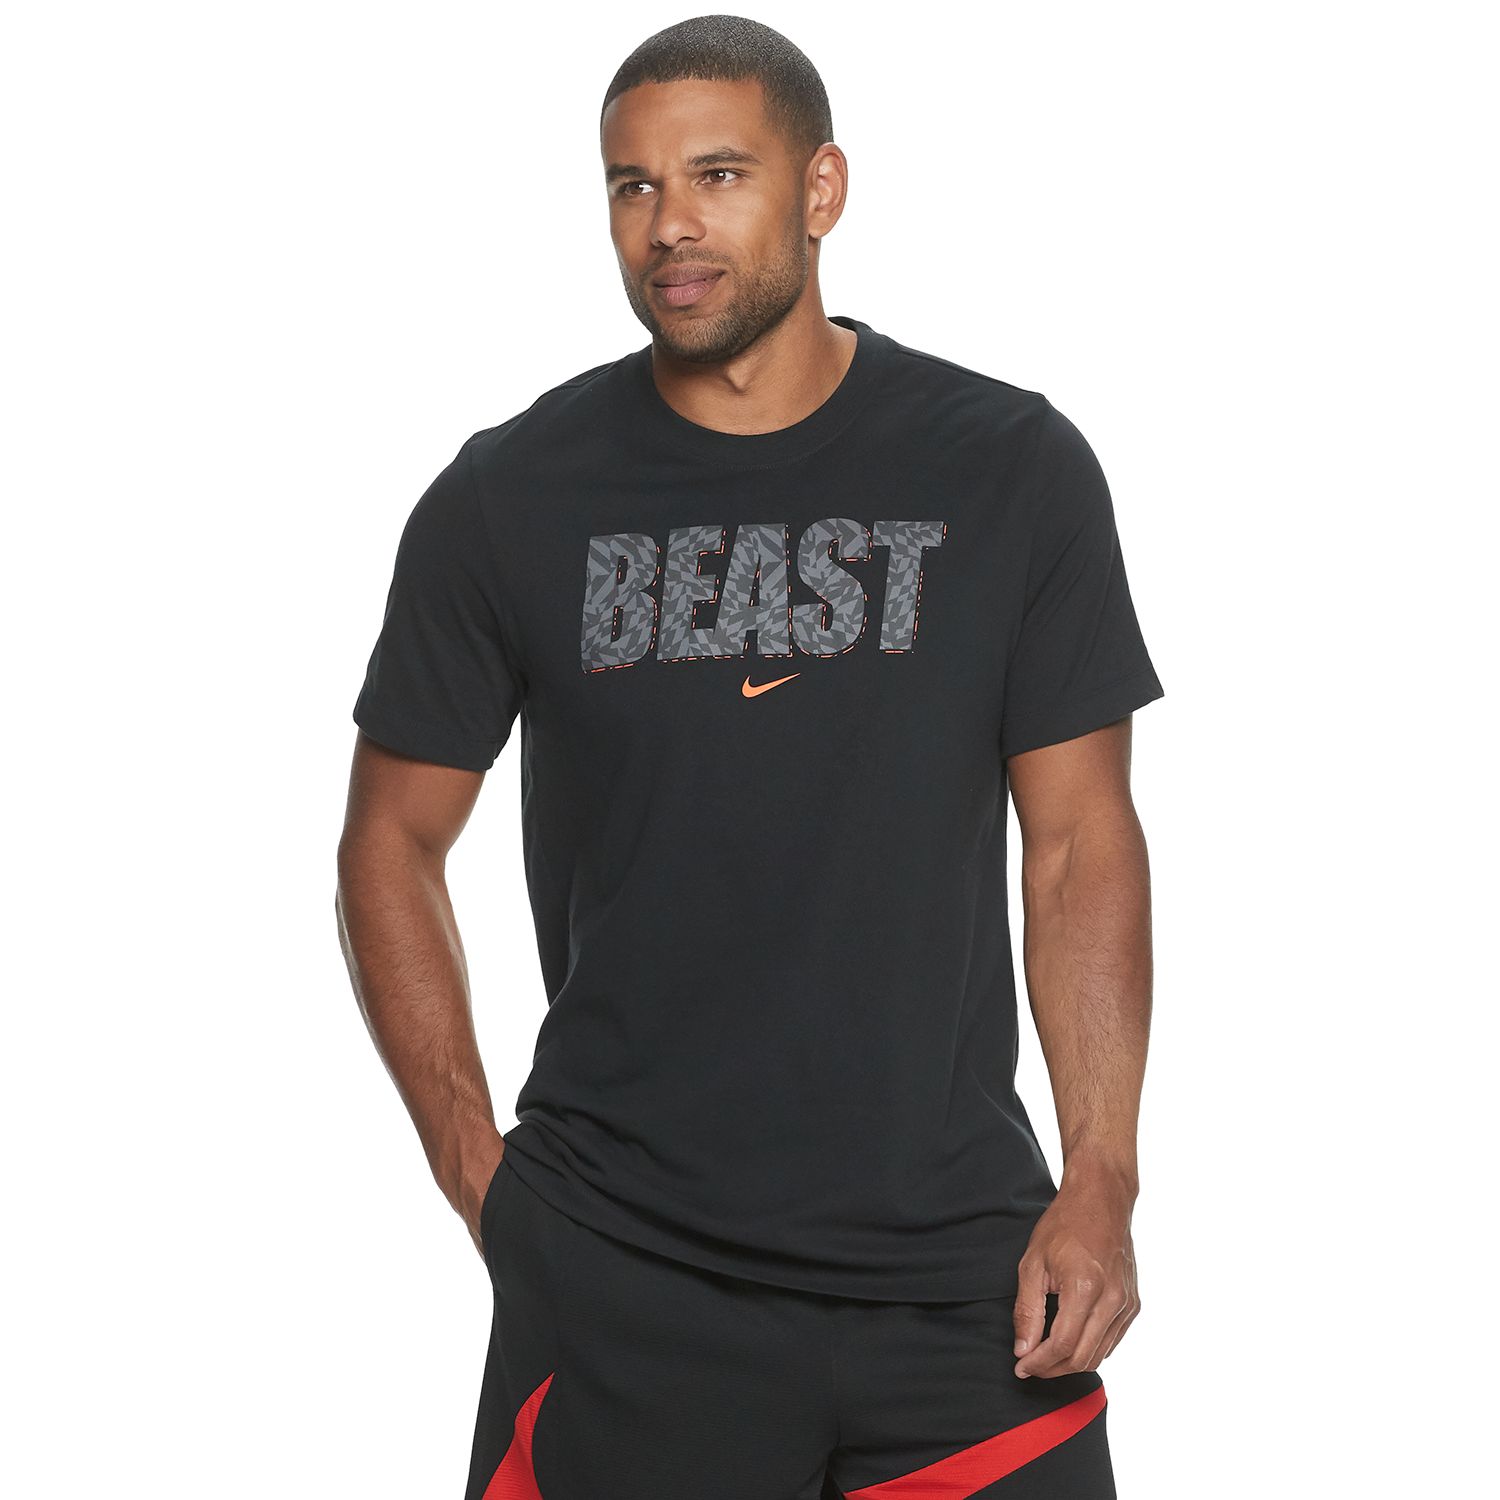 Men's Nike Beast Tee